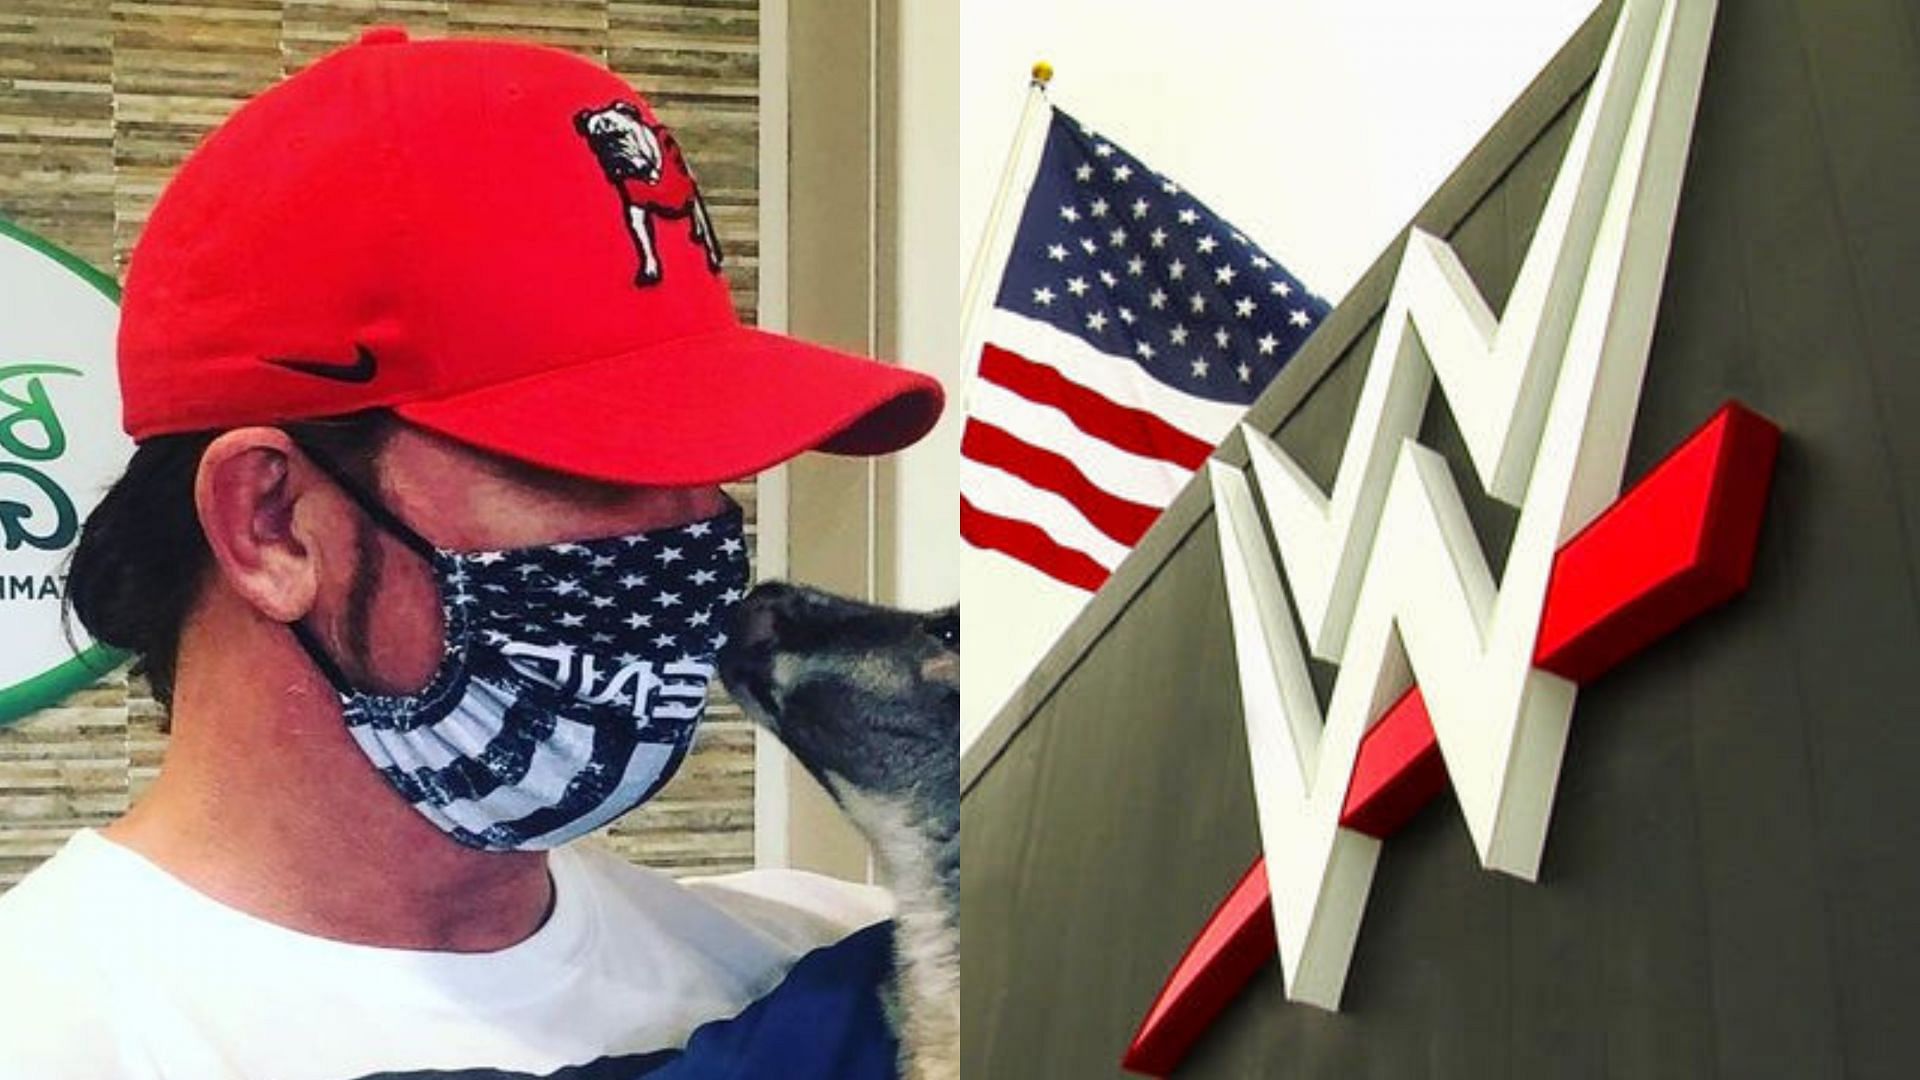 AJ Styles will face Cody Rhodes at WWE Backlash